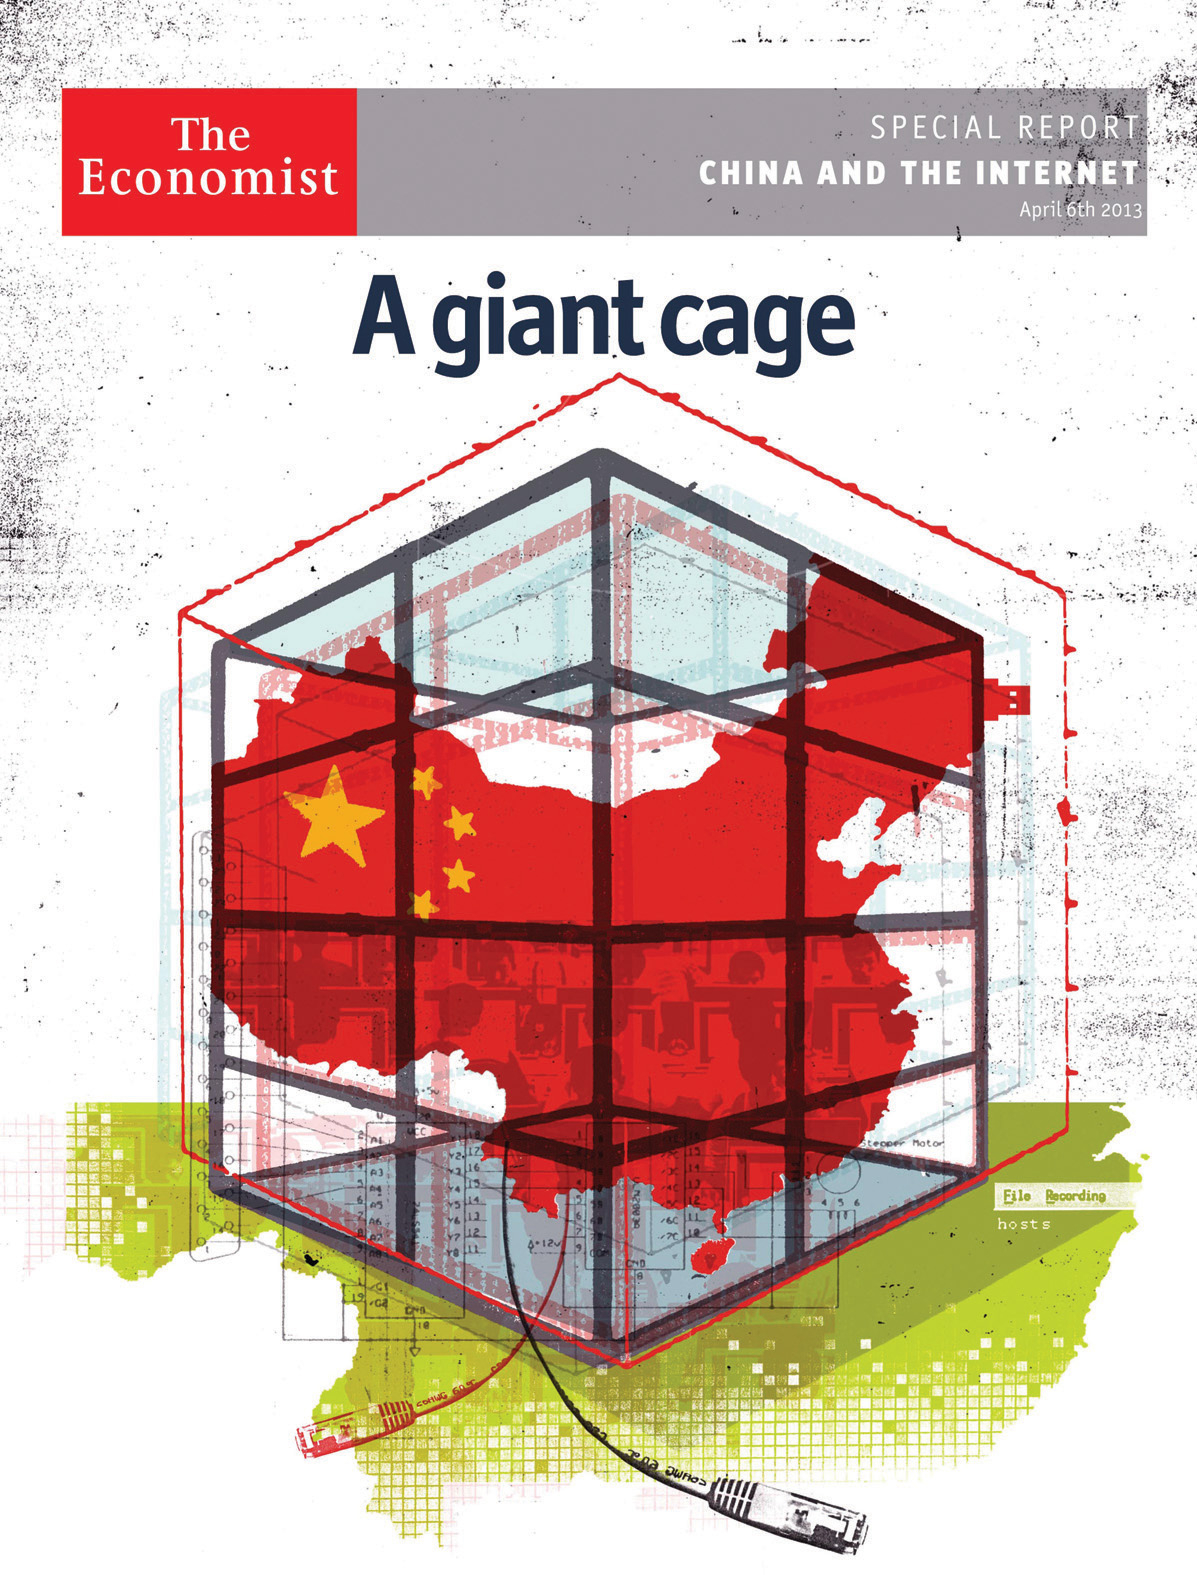 A Giant Cage / The Economist